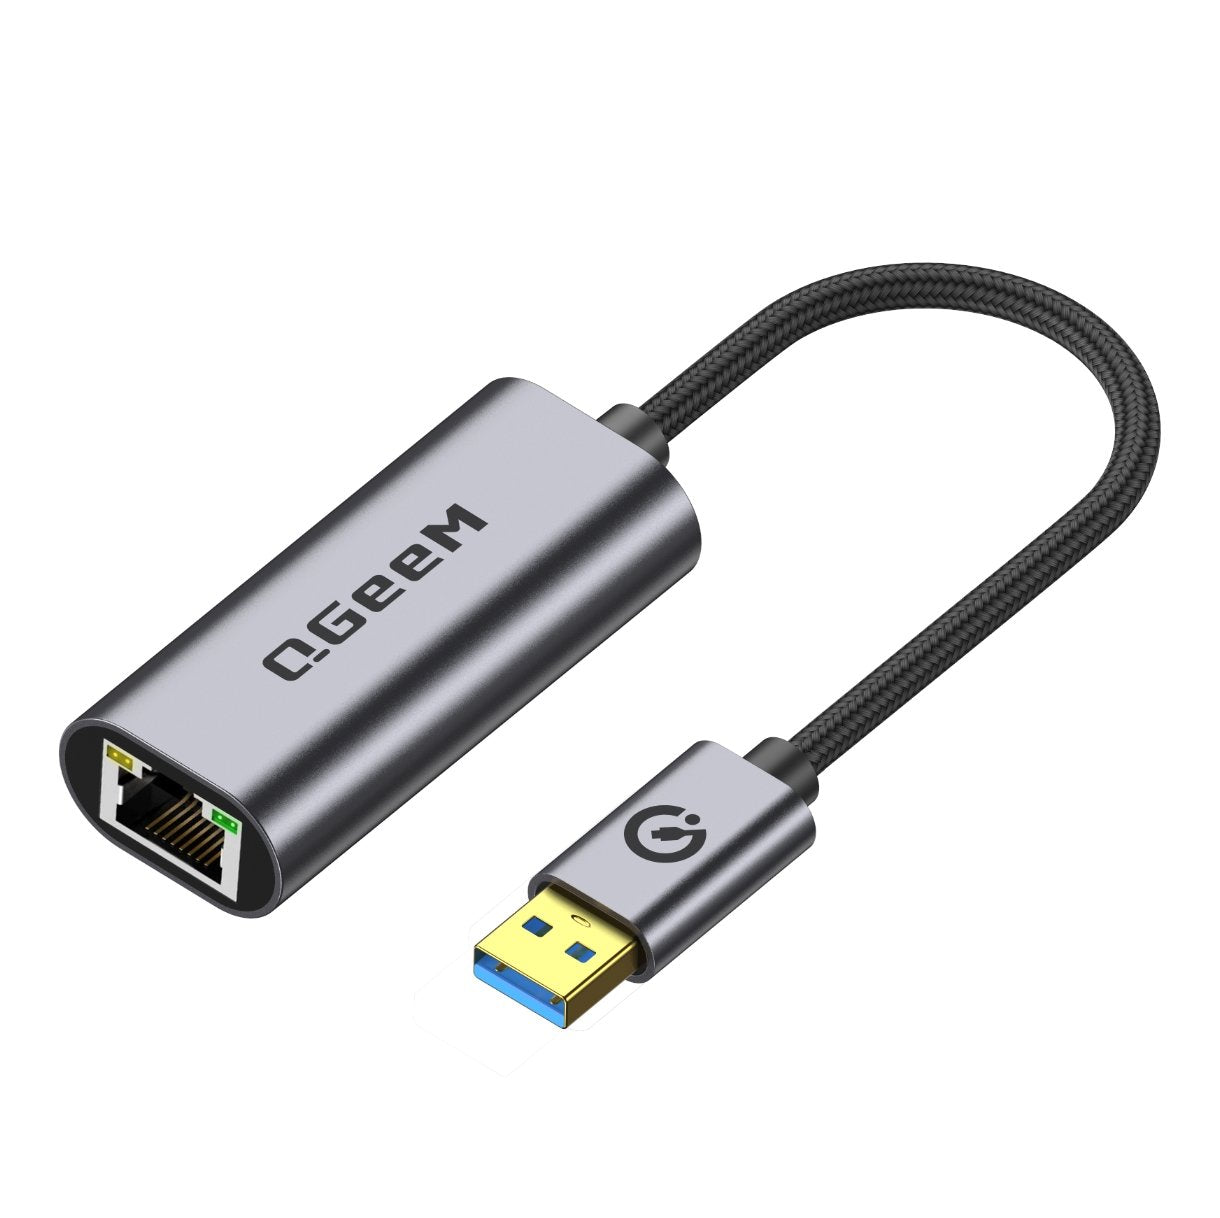 USB to Gigabit Adapter